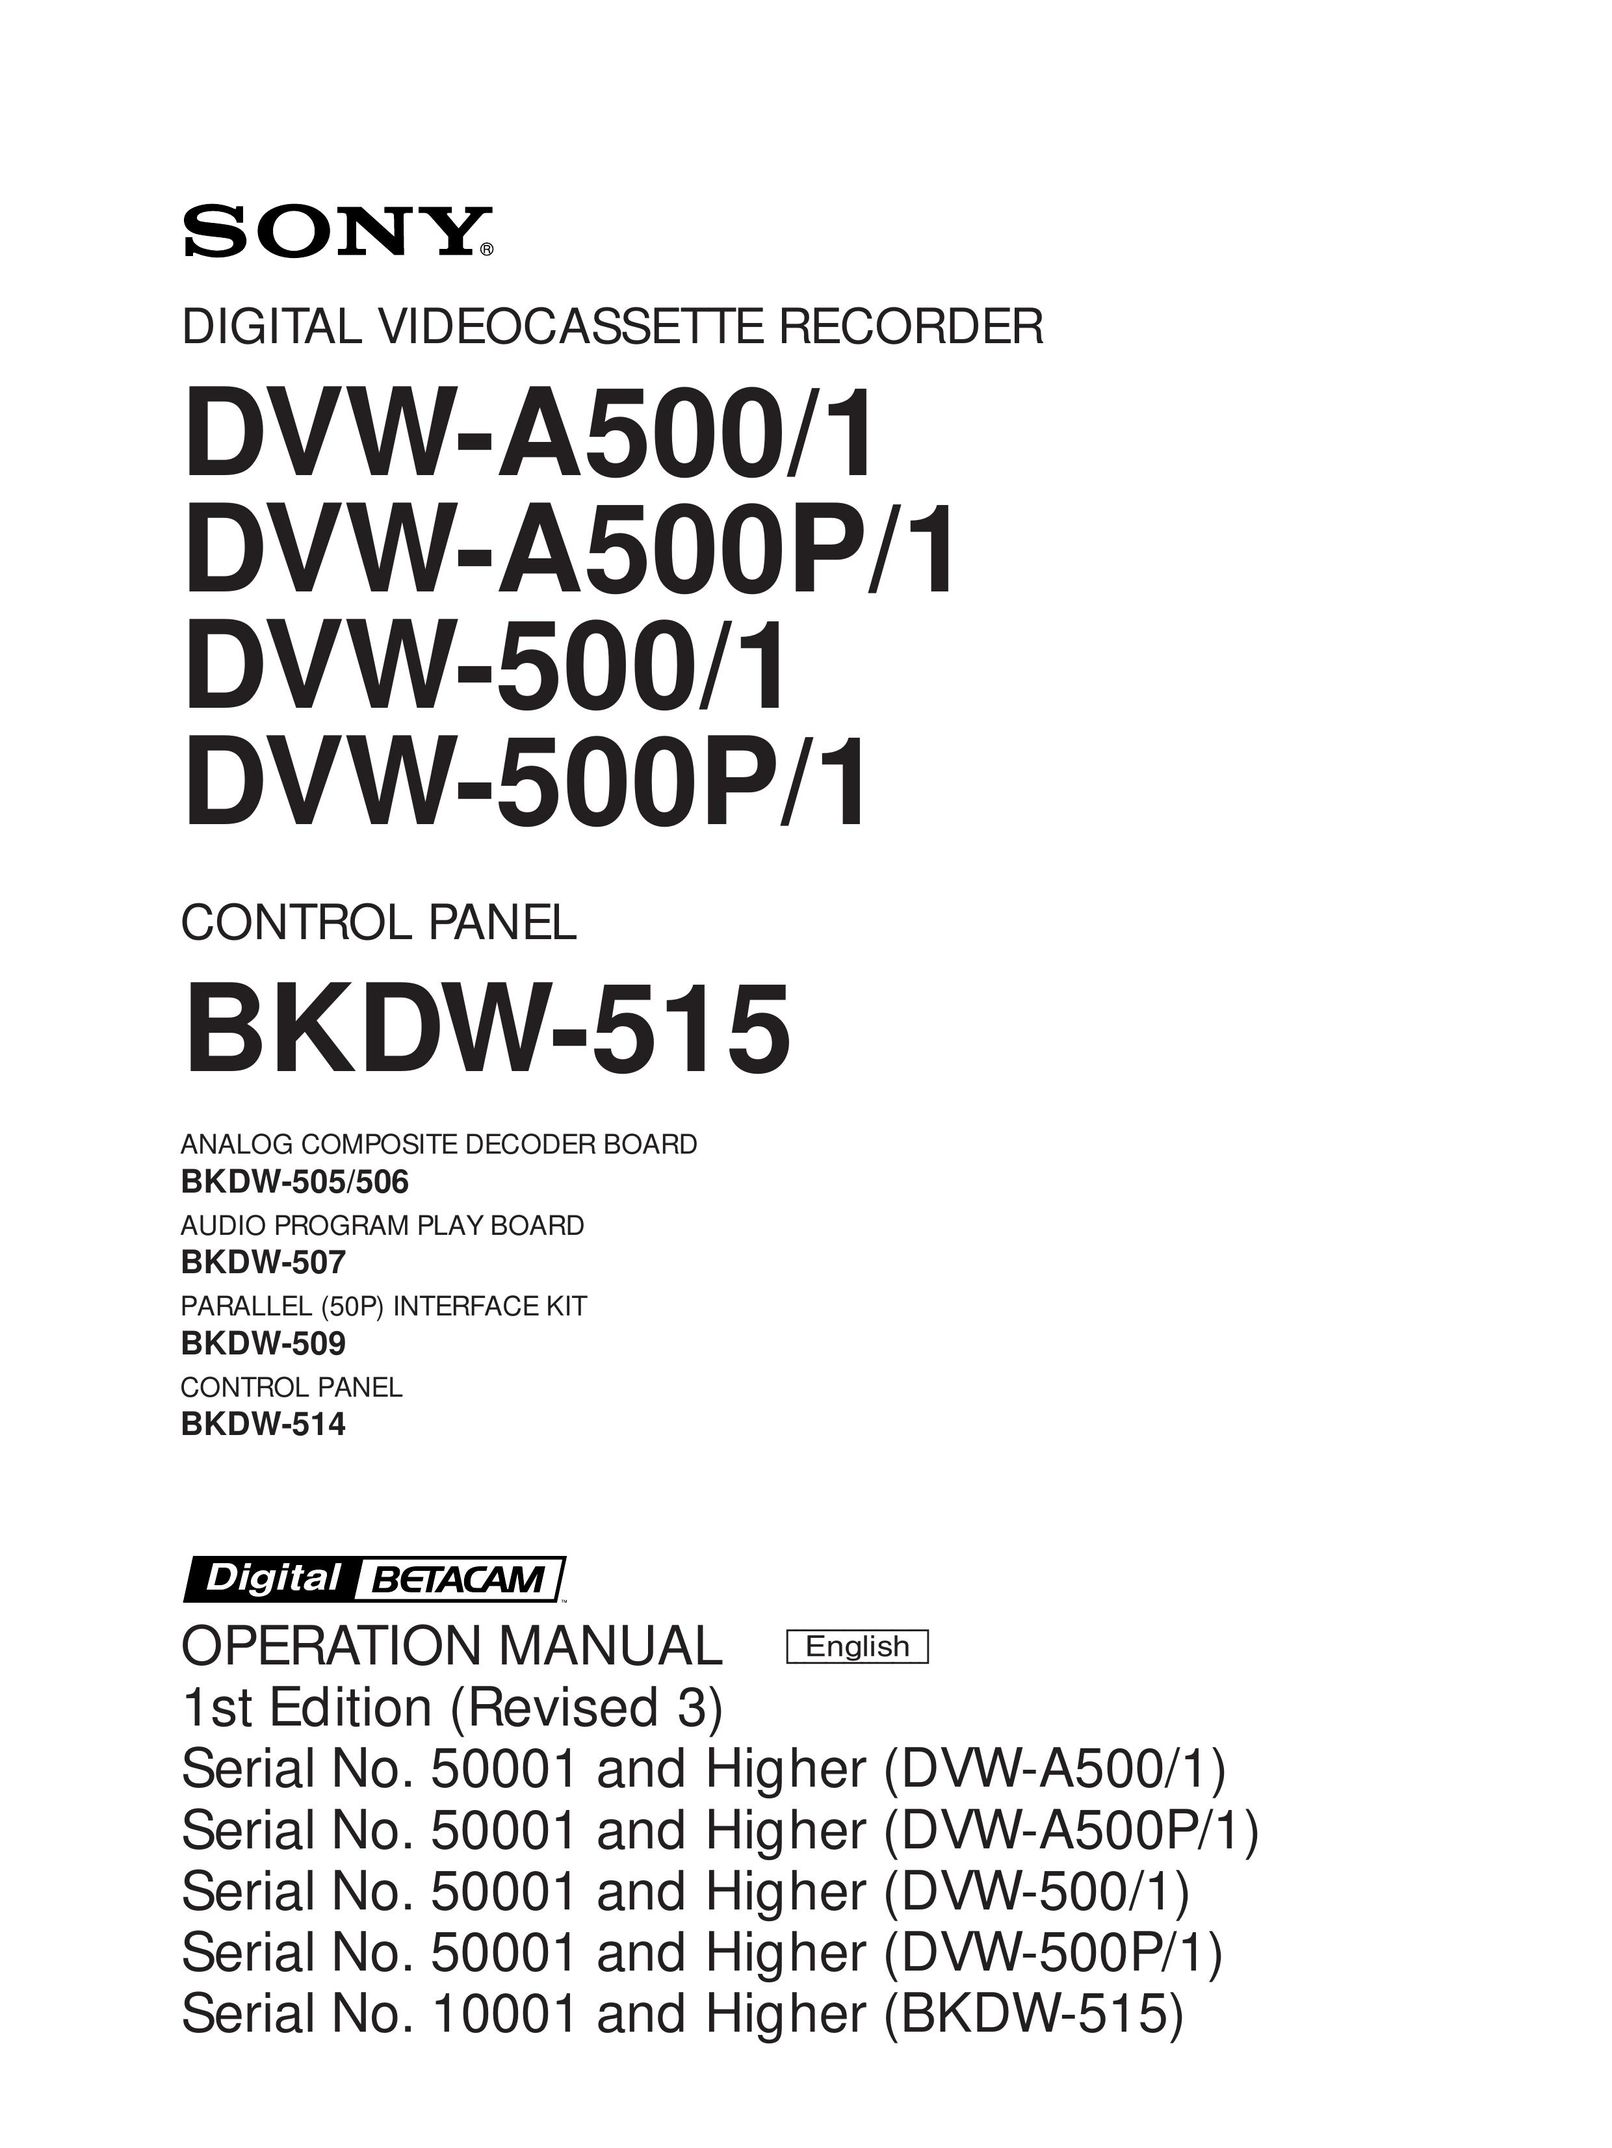 Sony DVW-A500/1 DVR User Manual